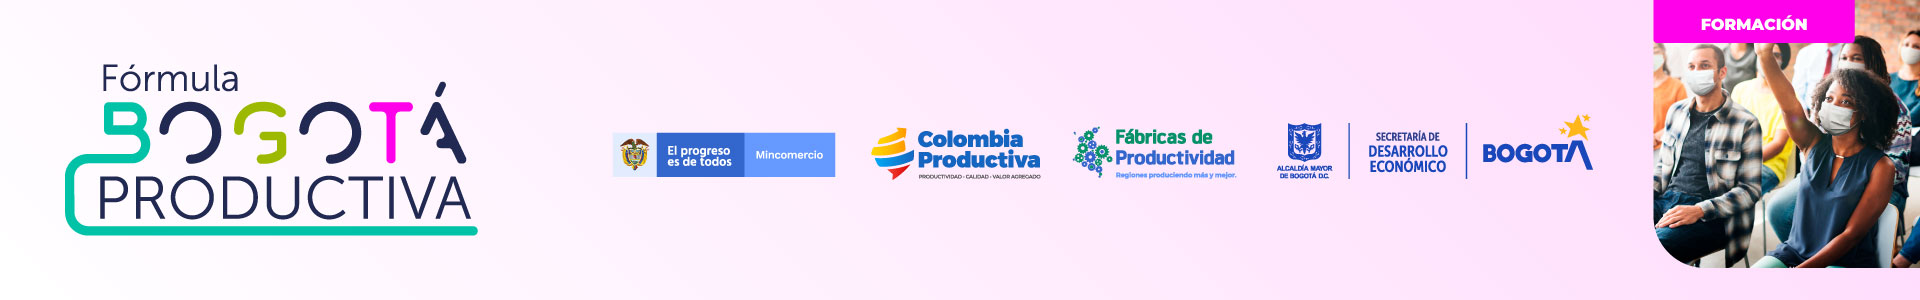 EstrategiaClusteren Colombia Productiva